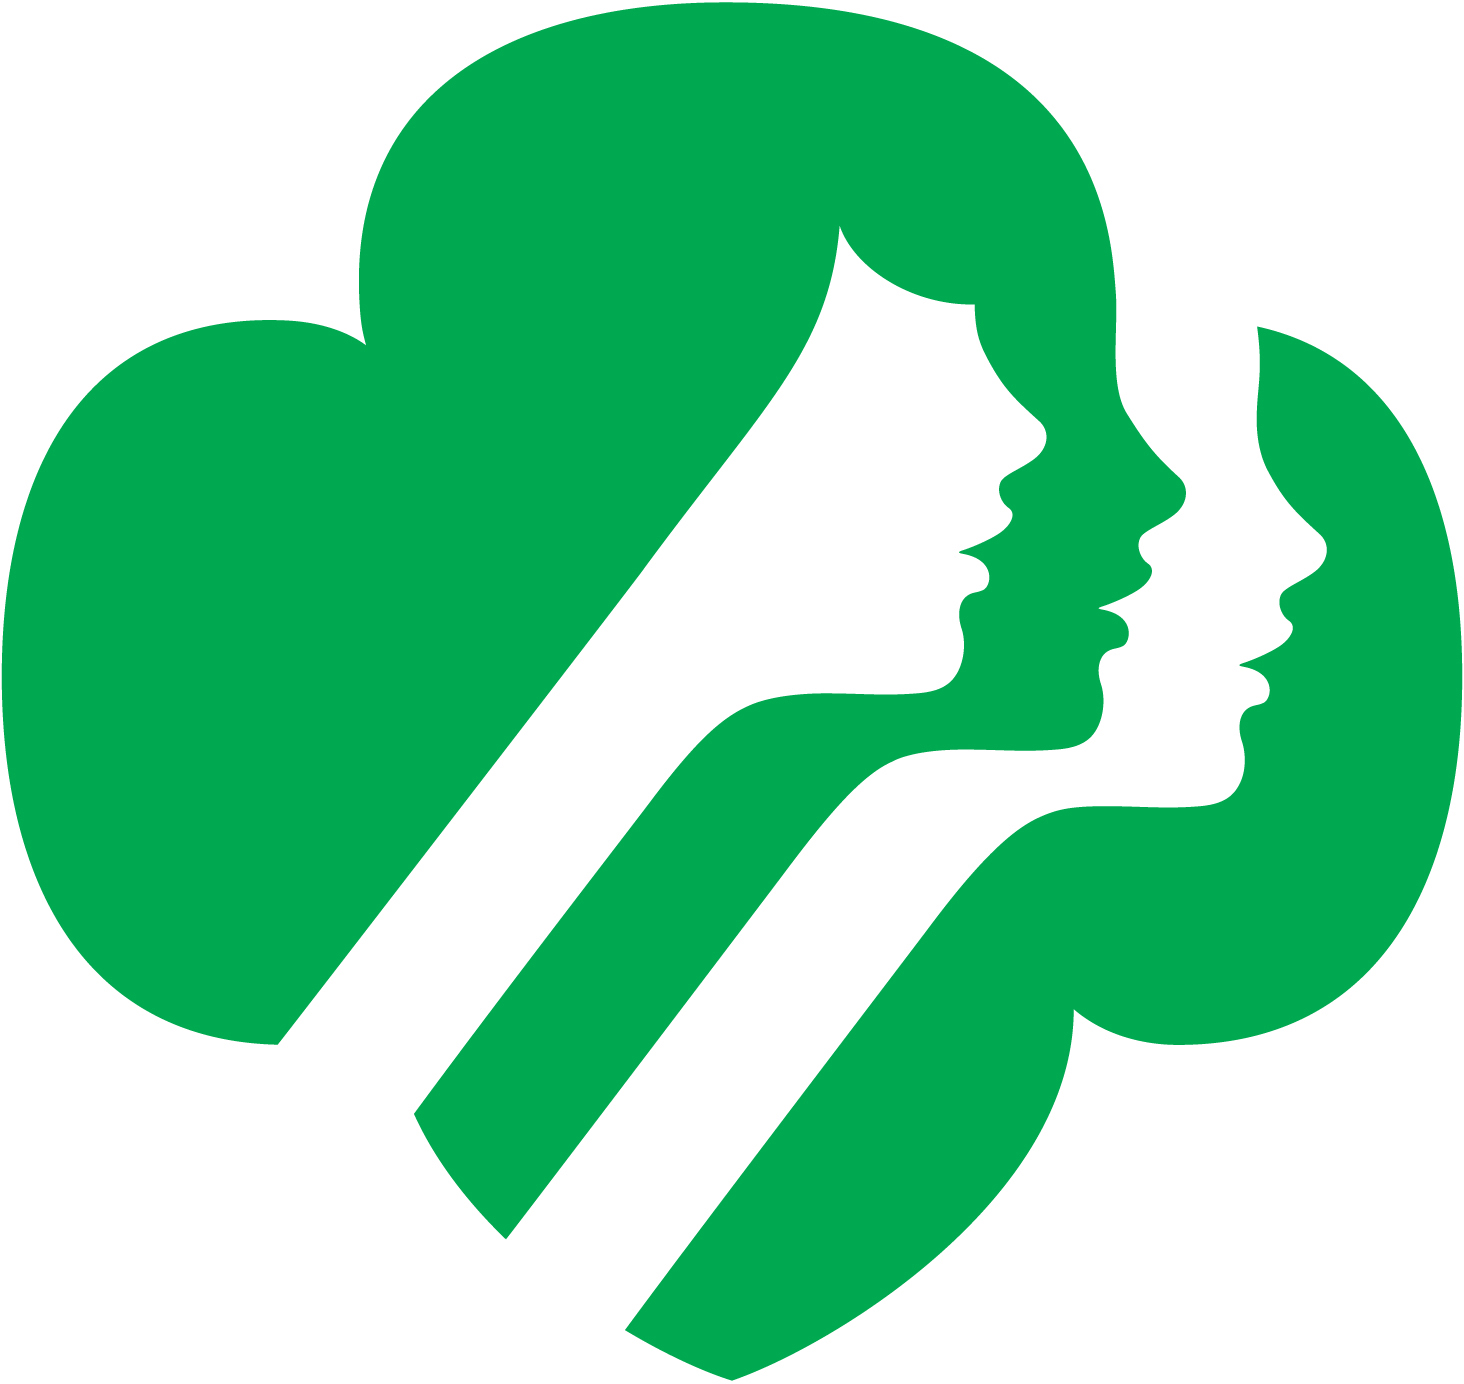 Girl scout clip art logo clip